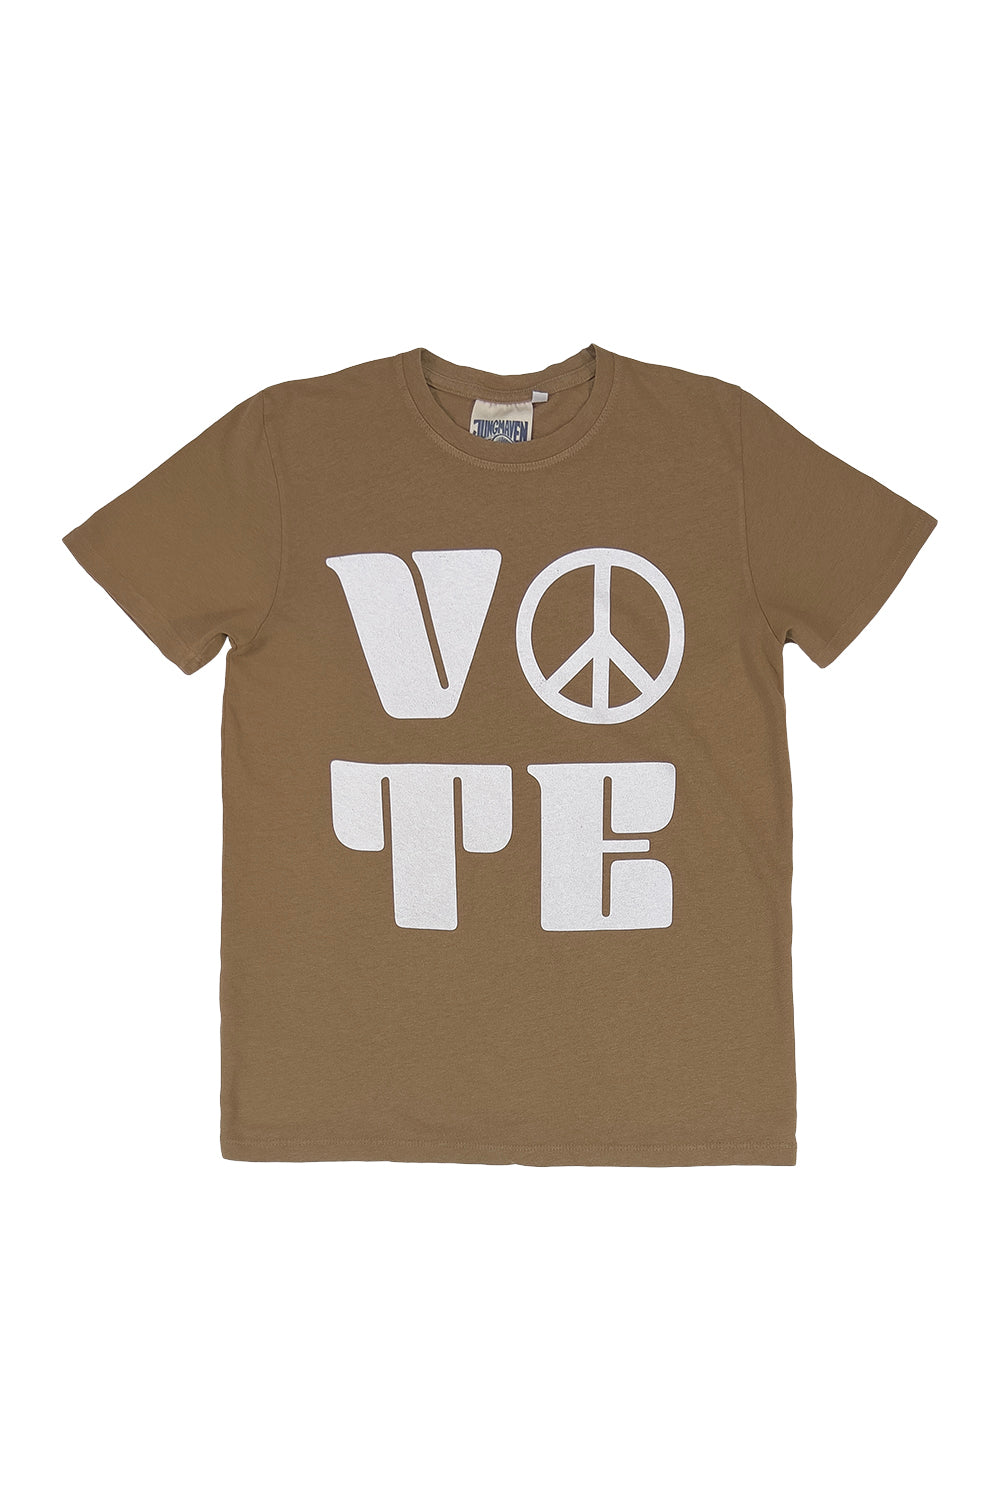 Vote Peace Baja Tee | Jungmaven Hemp Clothing & Accessories / Color: Coyote